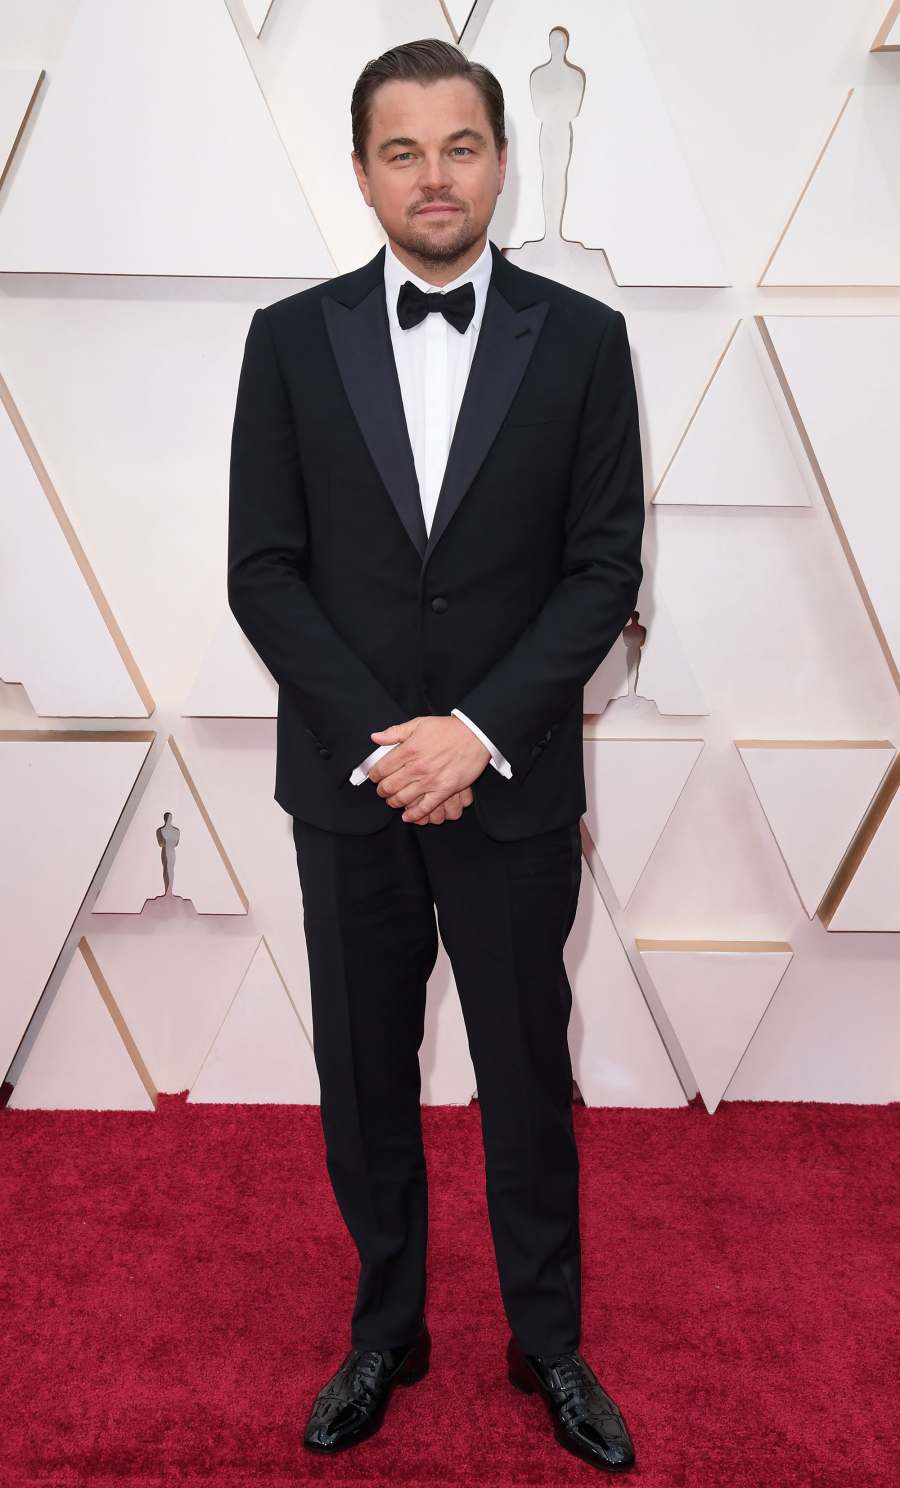 Oscars 2020 Best Dressed Men - Leonardo DiCaprio